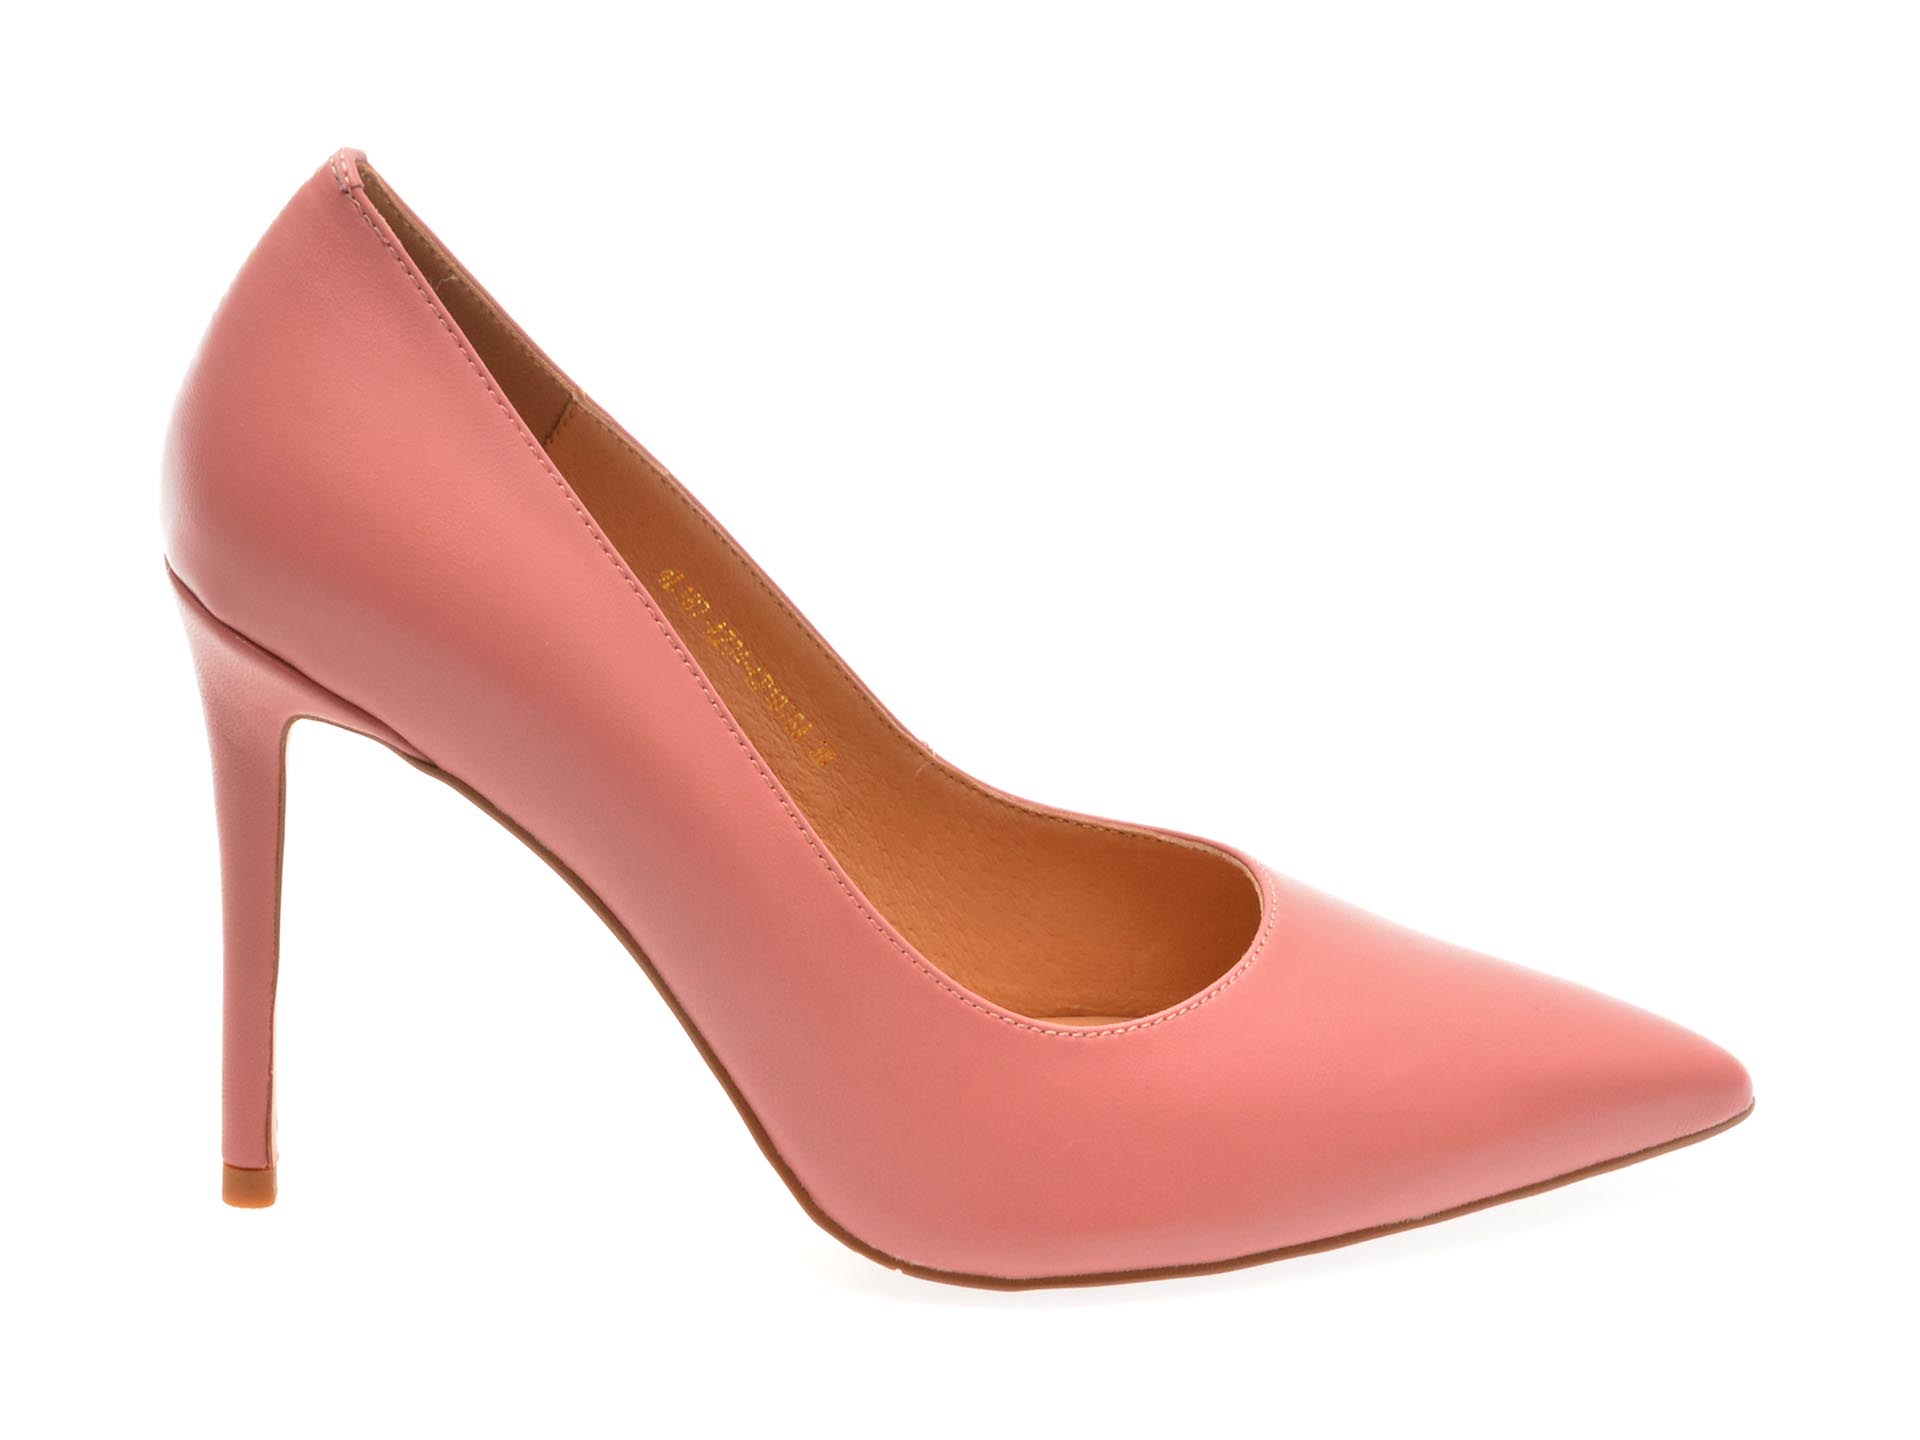 Pantofi eleganti EPICA roz, A234, din piele naturala